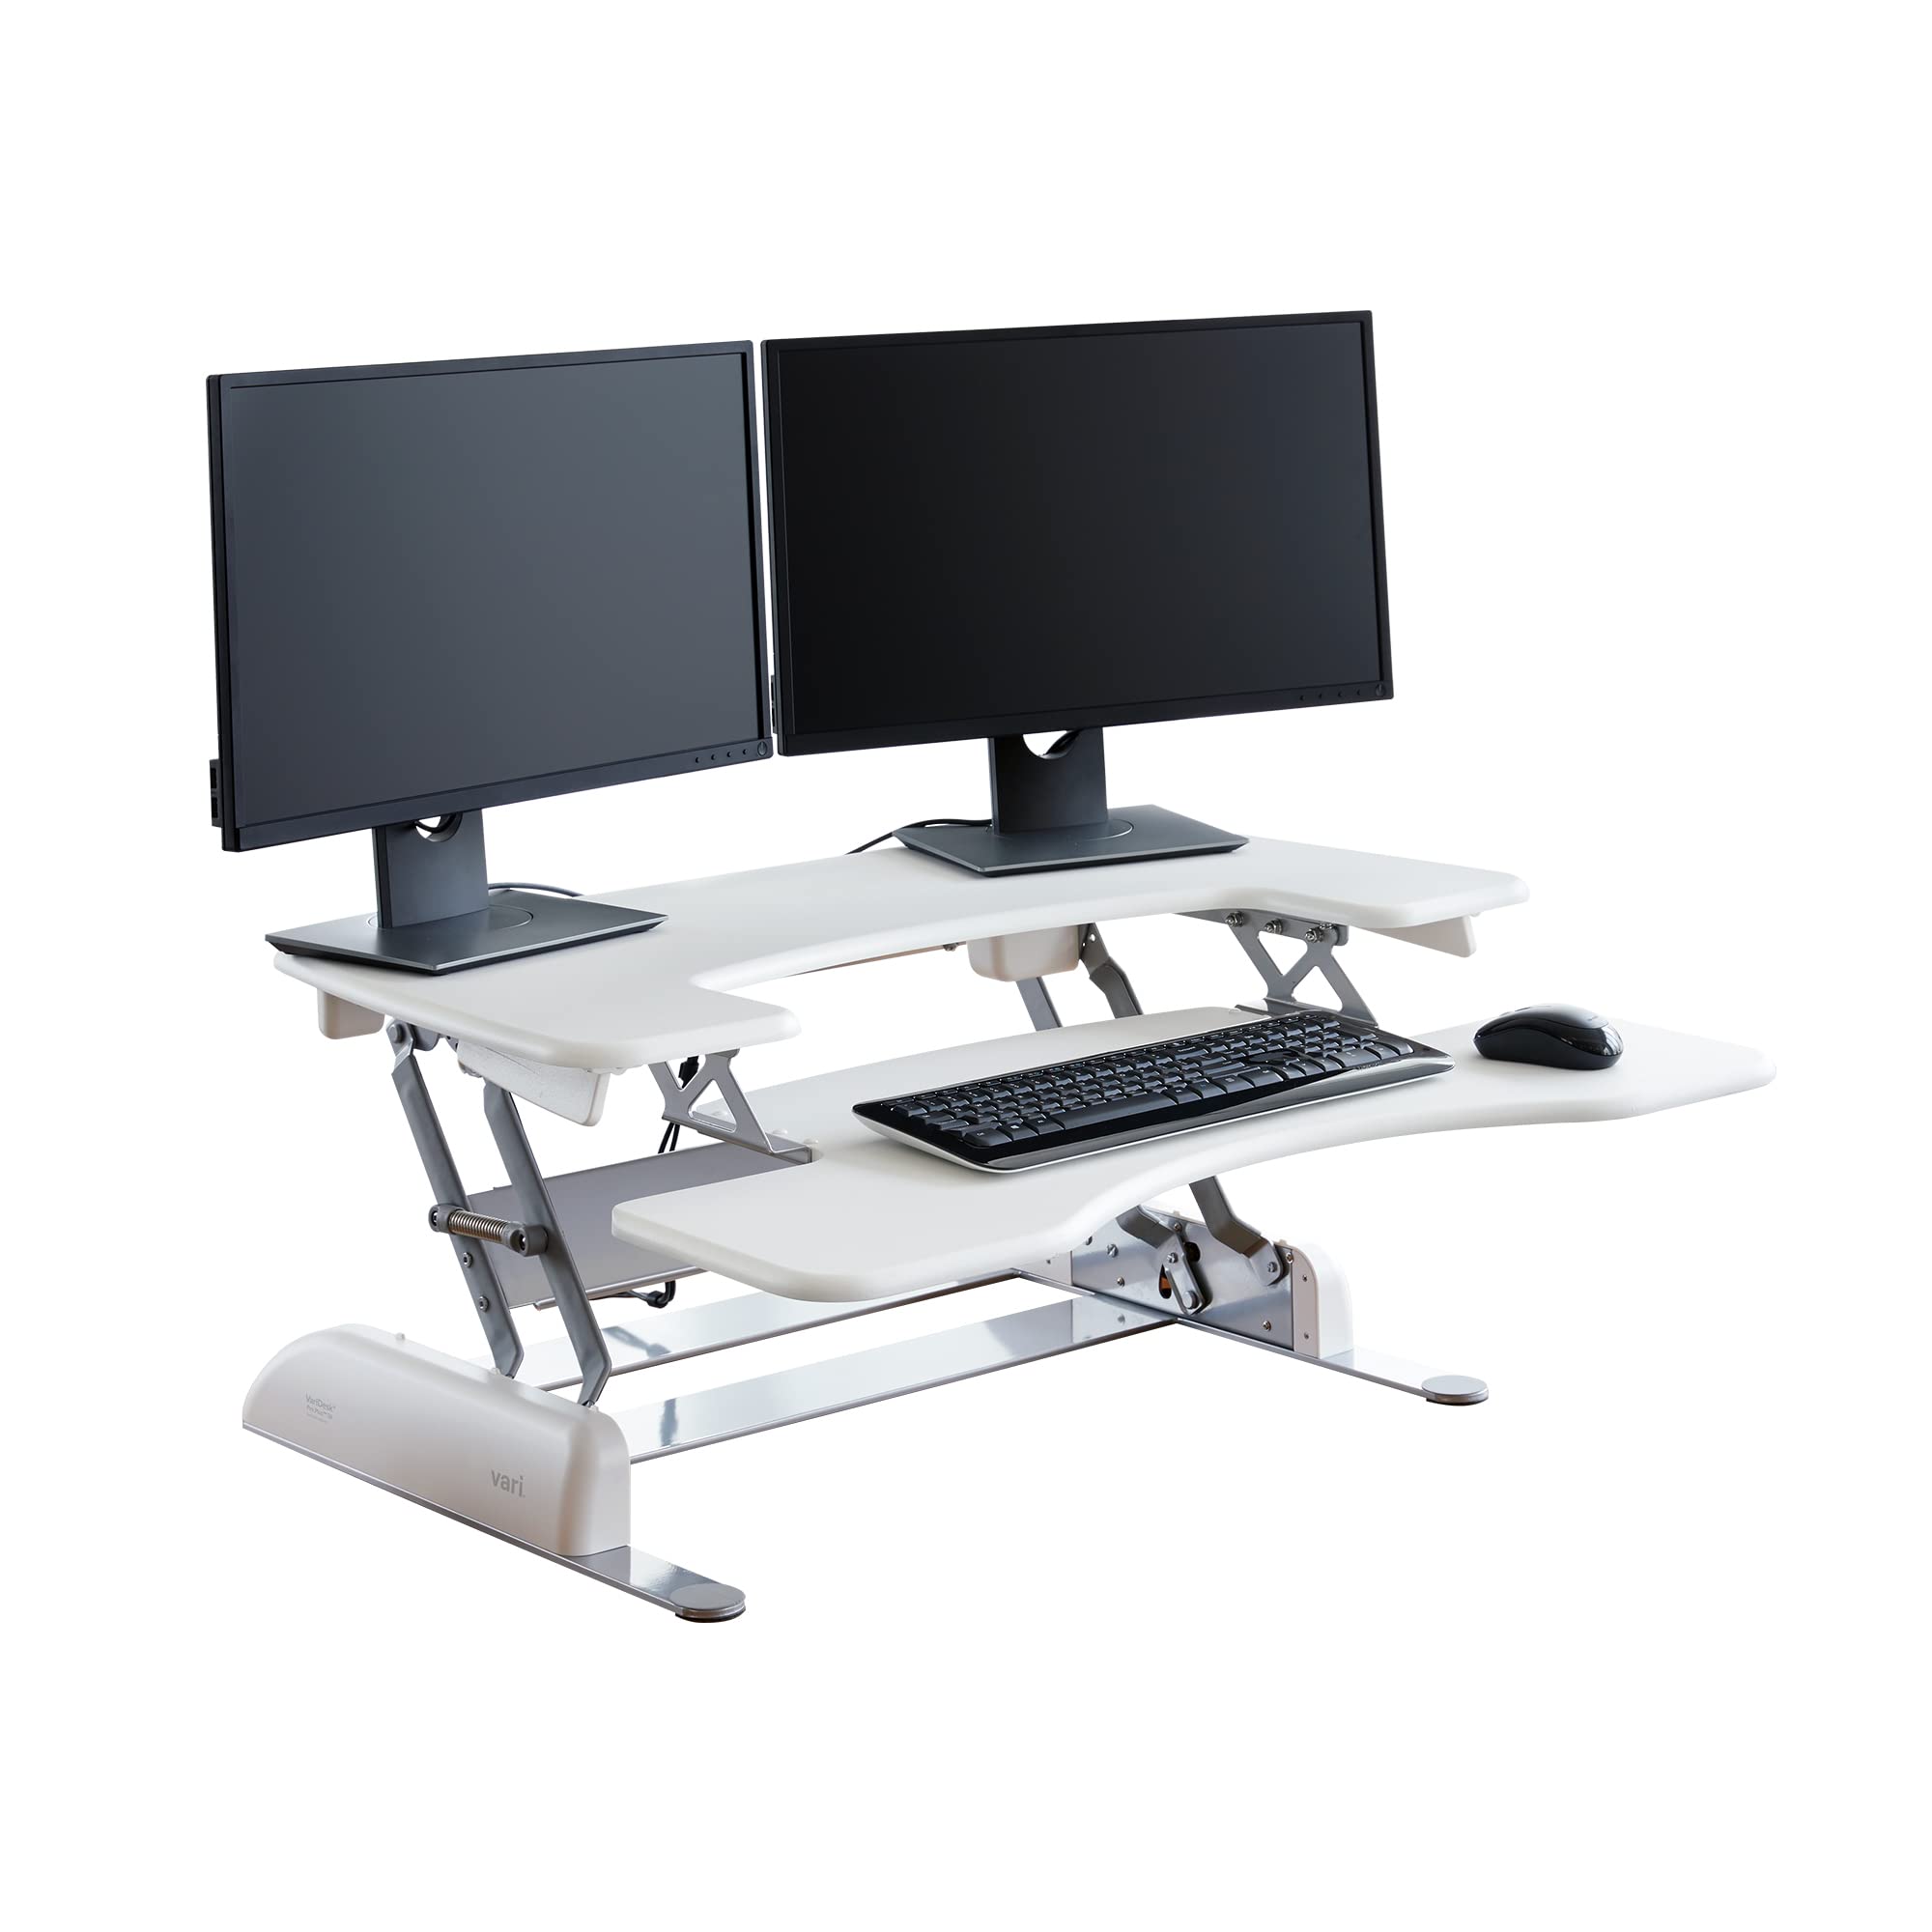 Vari - Varidesk Pro Plus 36 - Dual Monitor Standing Desk Converter - Adjustable Desk Riser With 11 Height Settings - Stand Up Ho